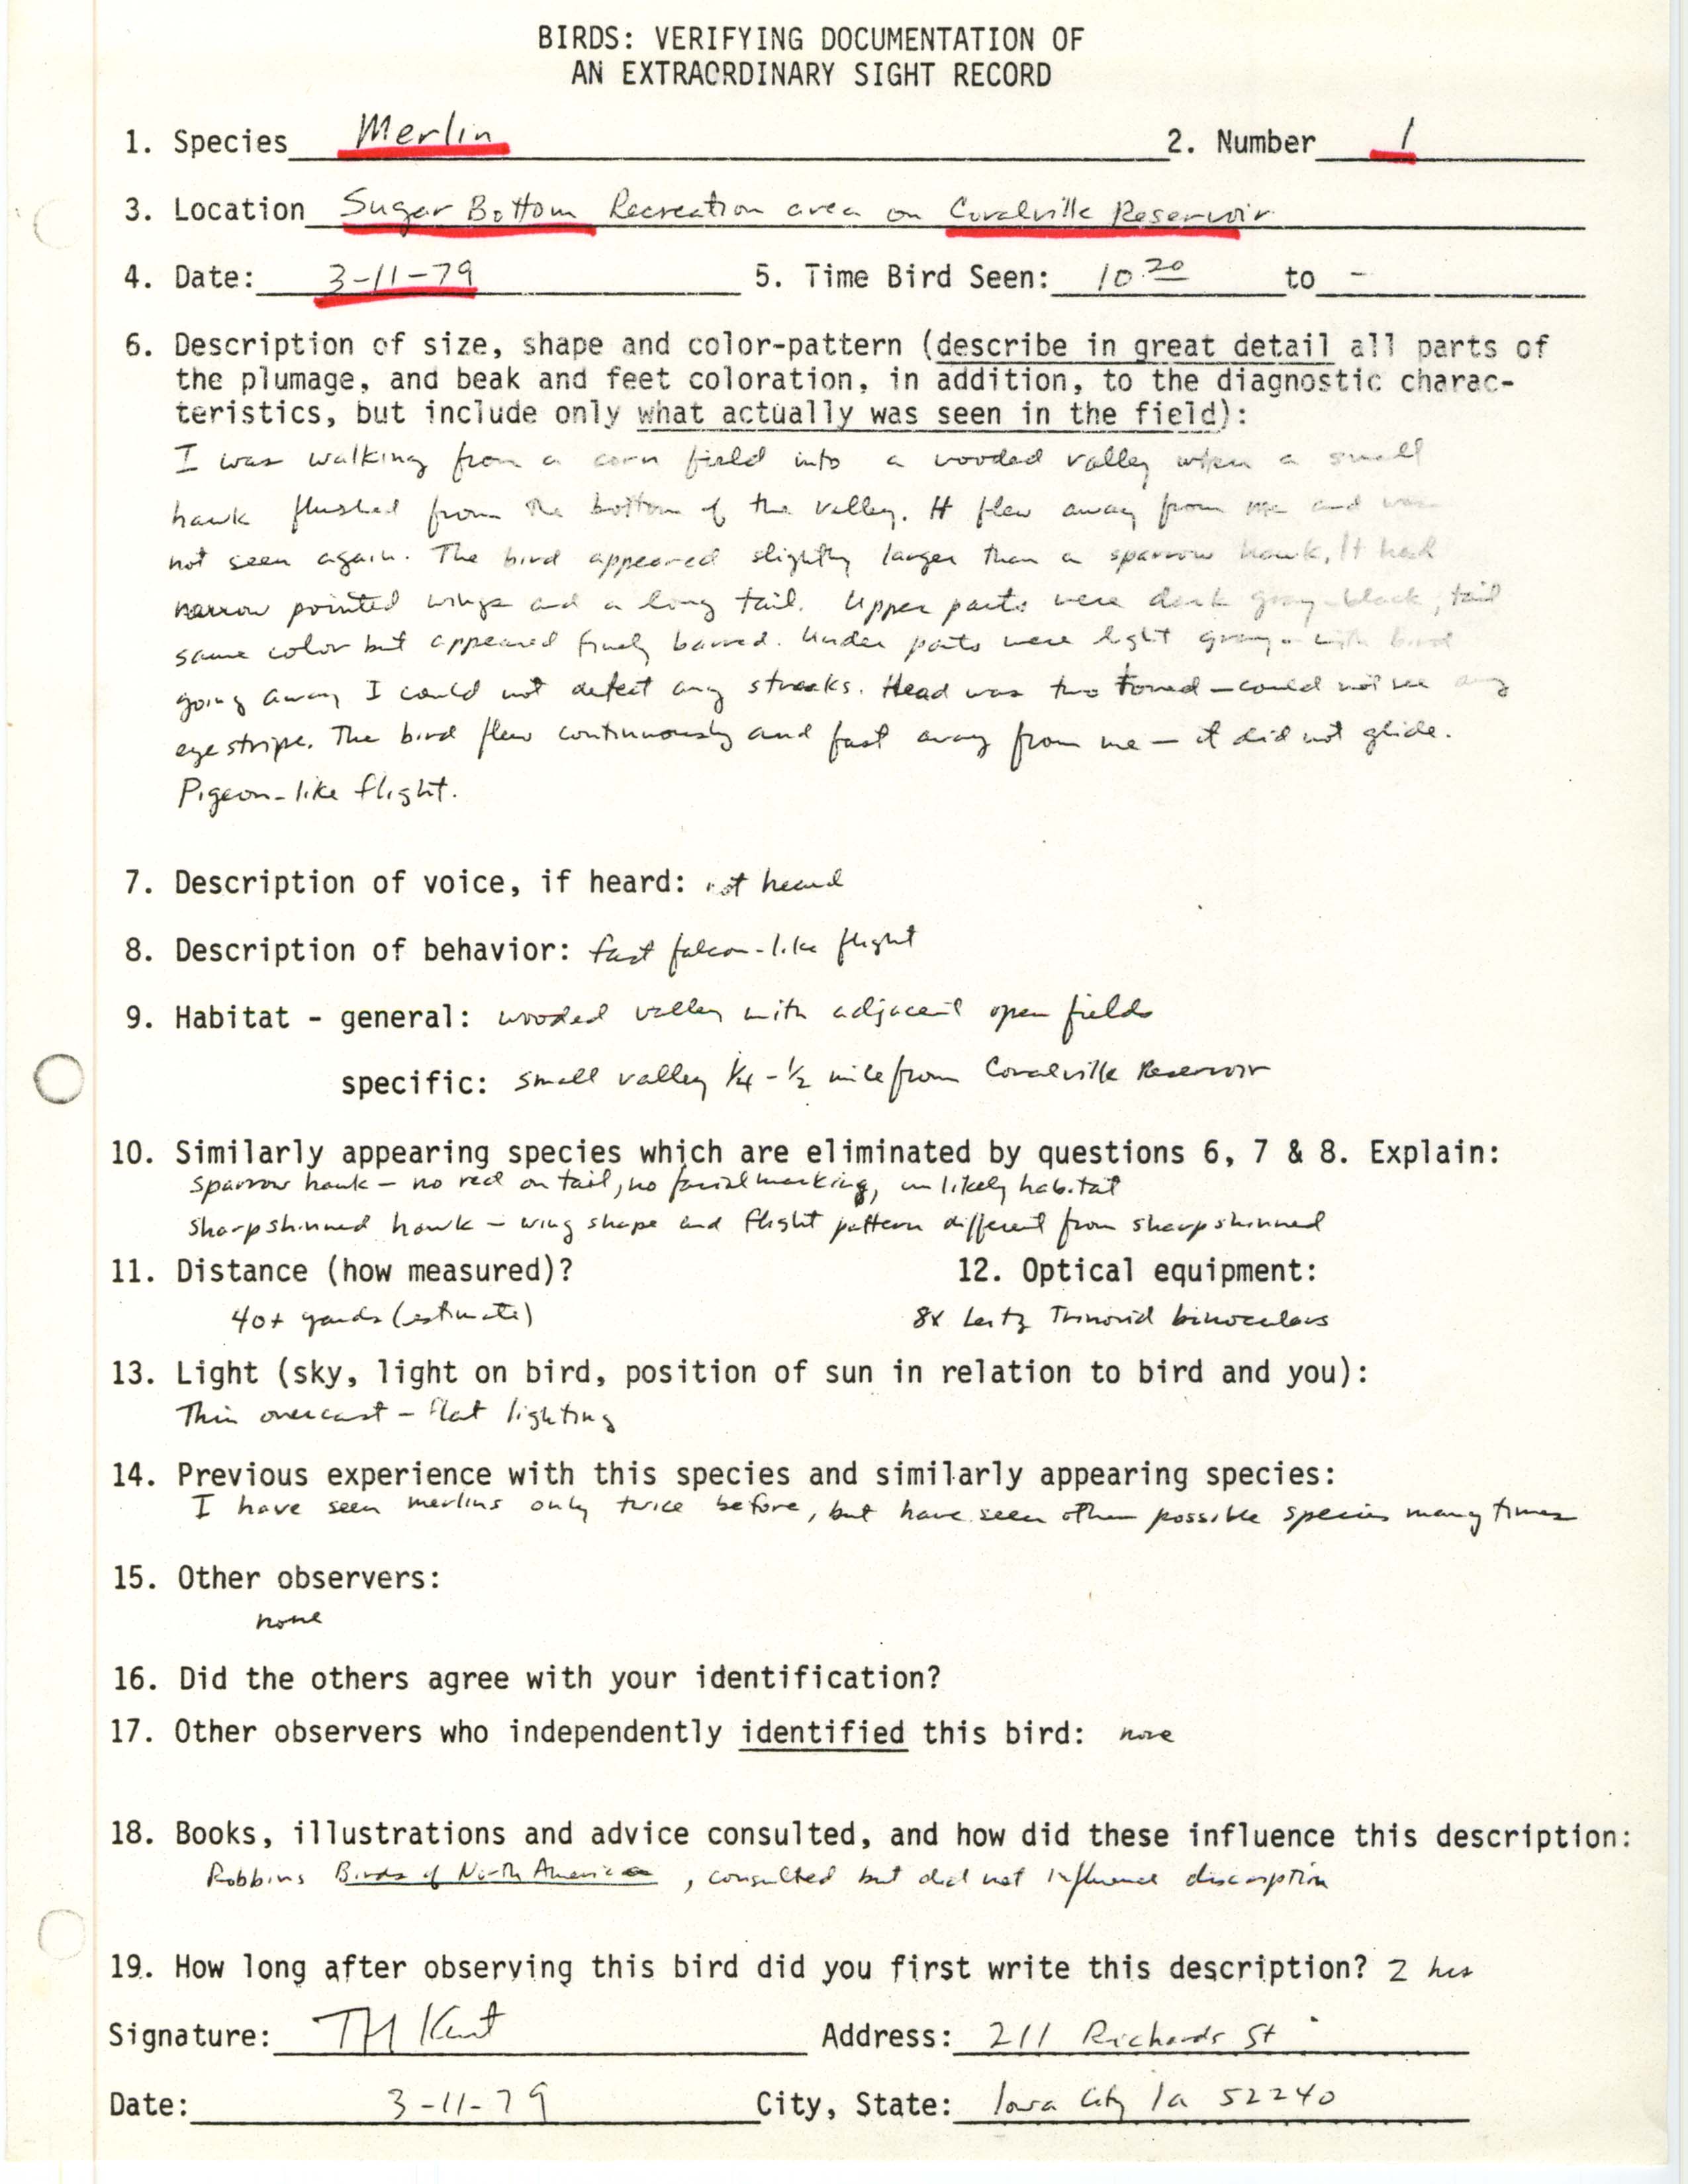 Rare bird documentation form for Merlin at Sugar Bottom Recreation Area, 1979